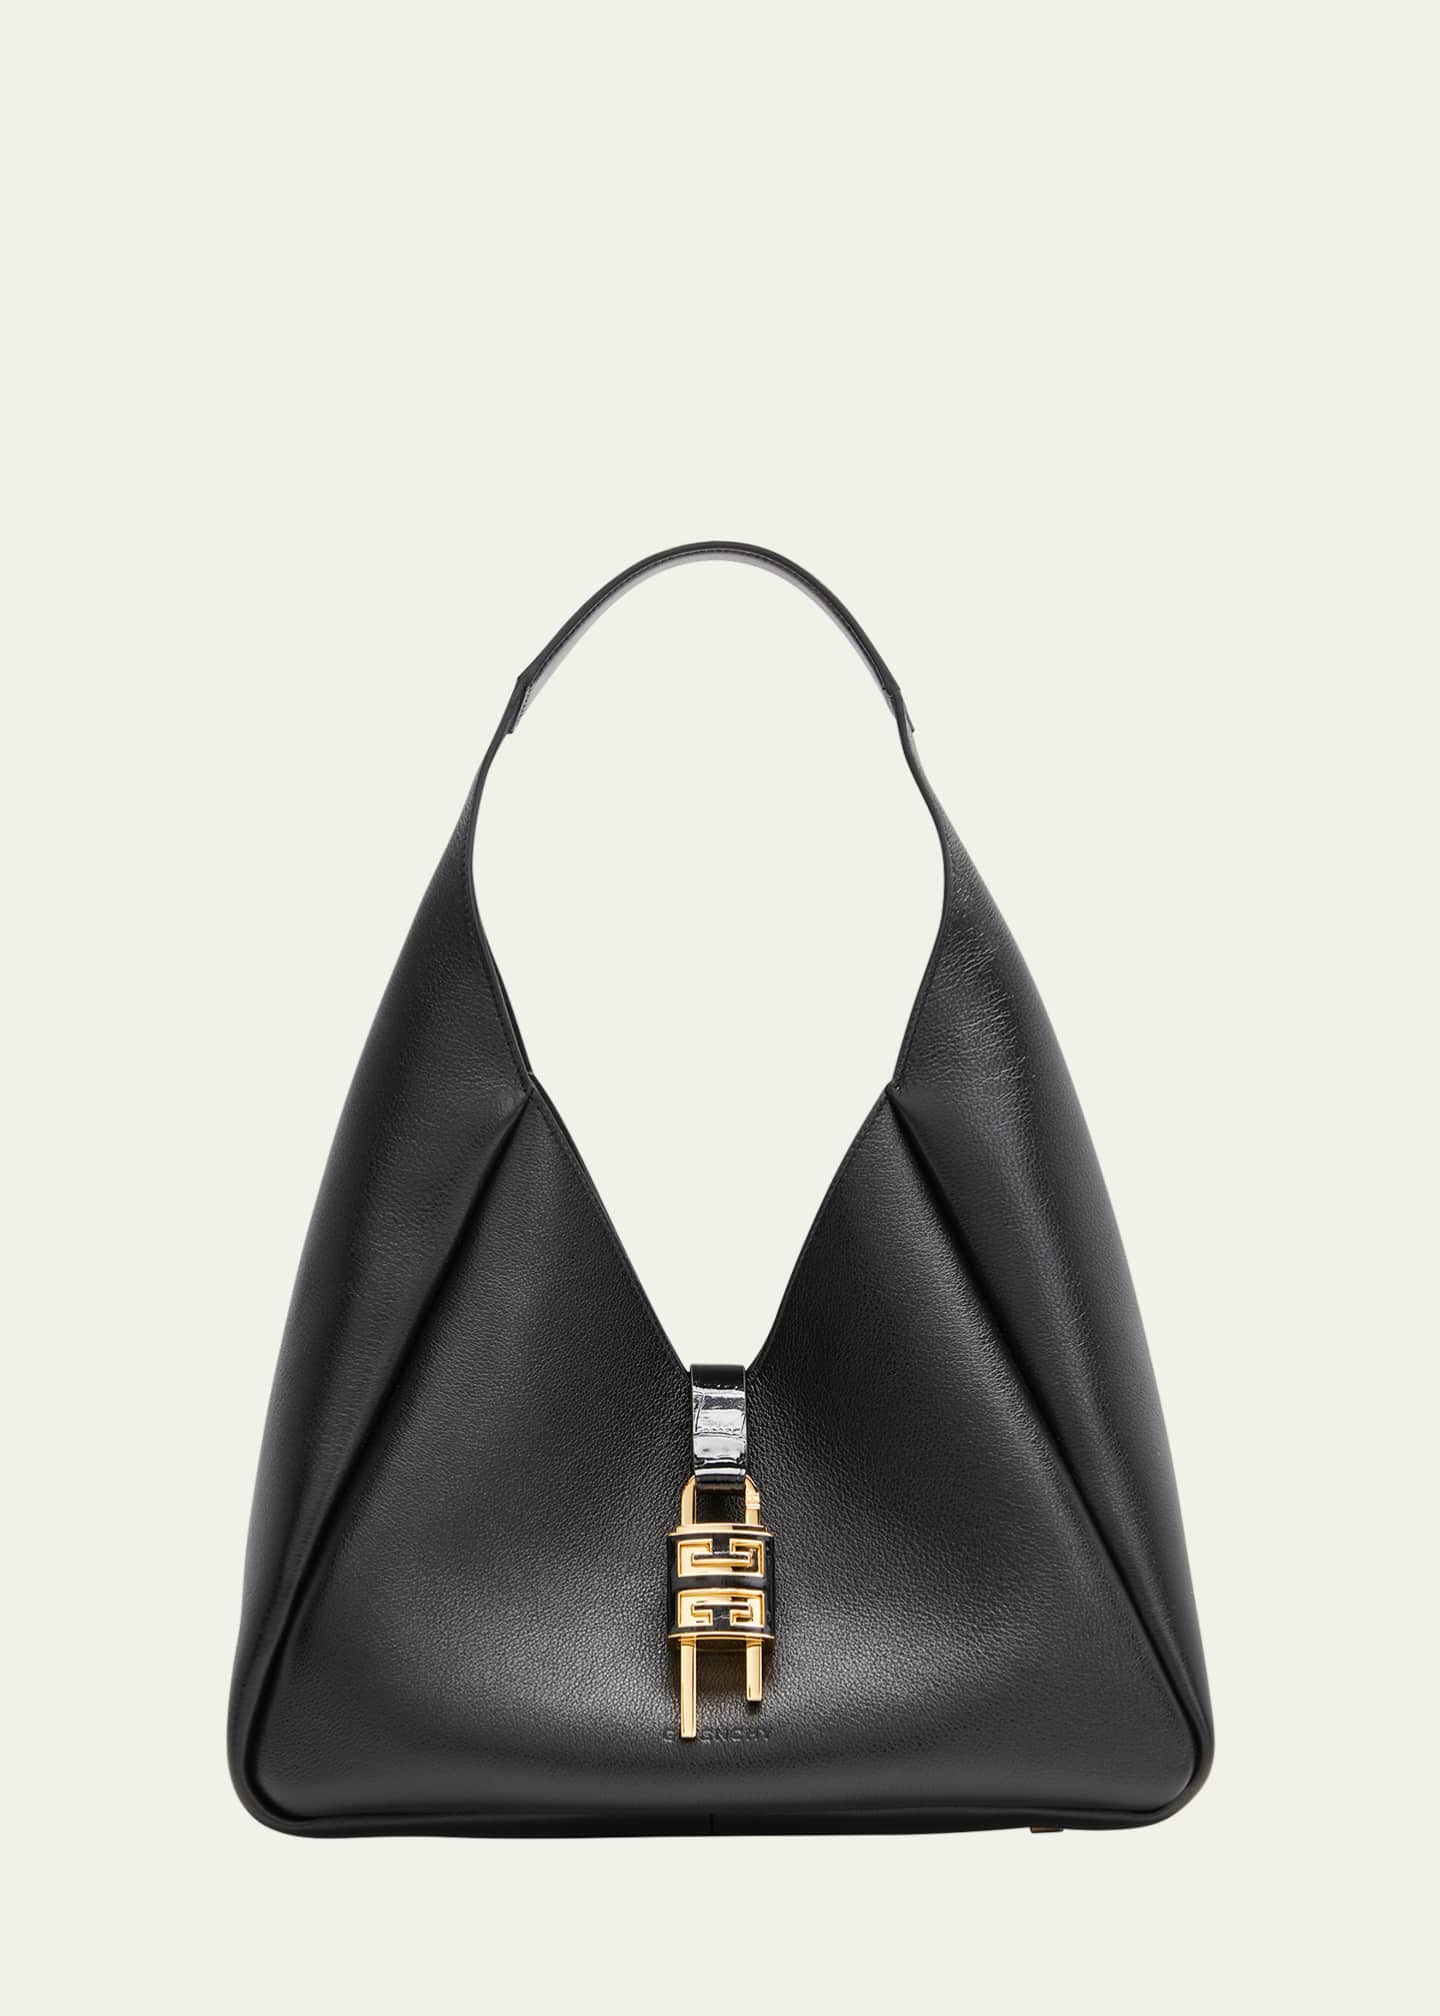 Givenchy Medium G Hobo Bag